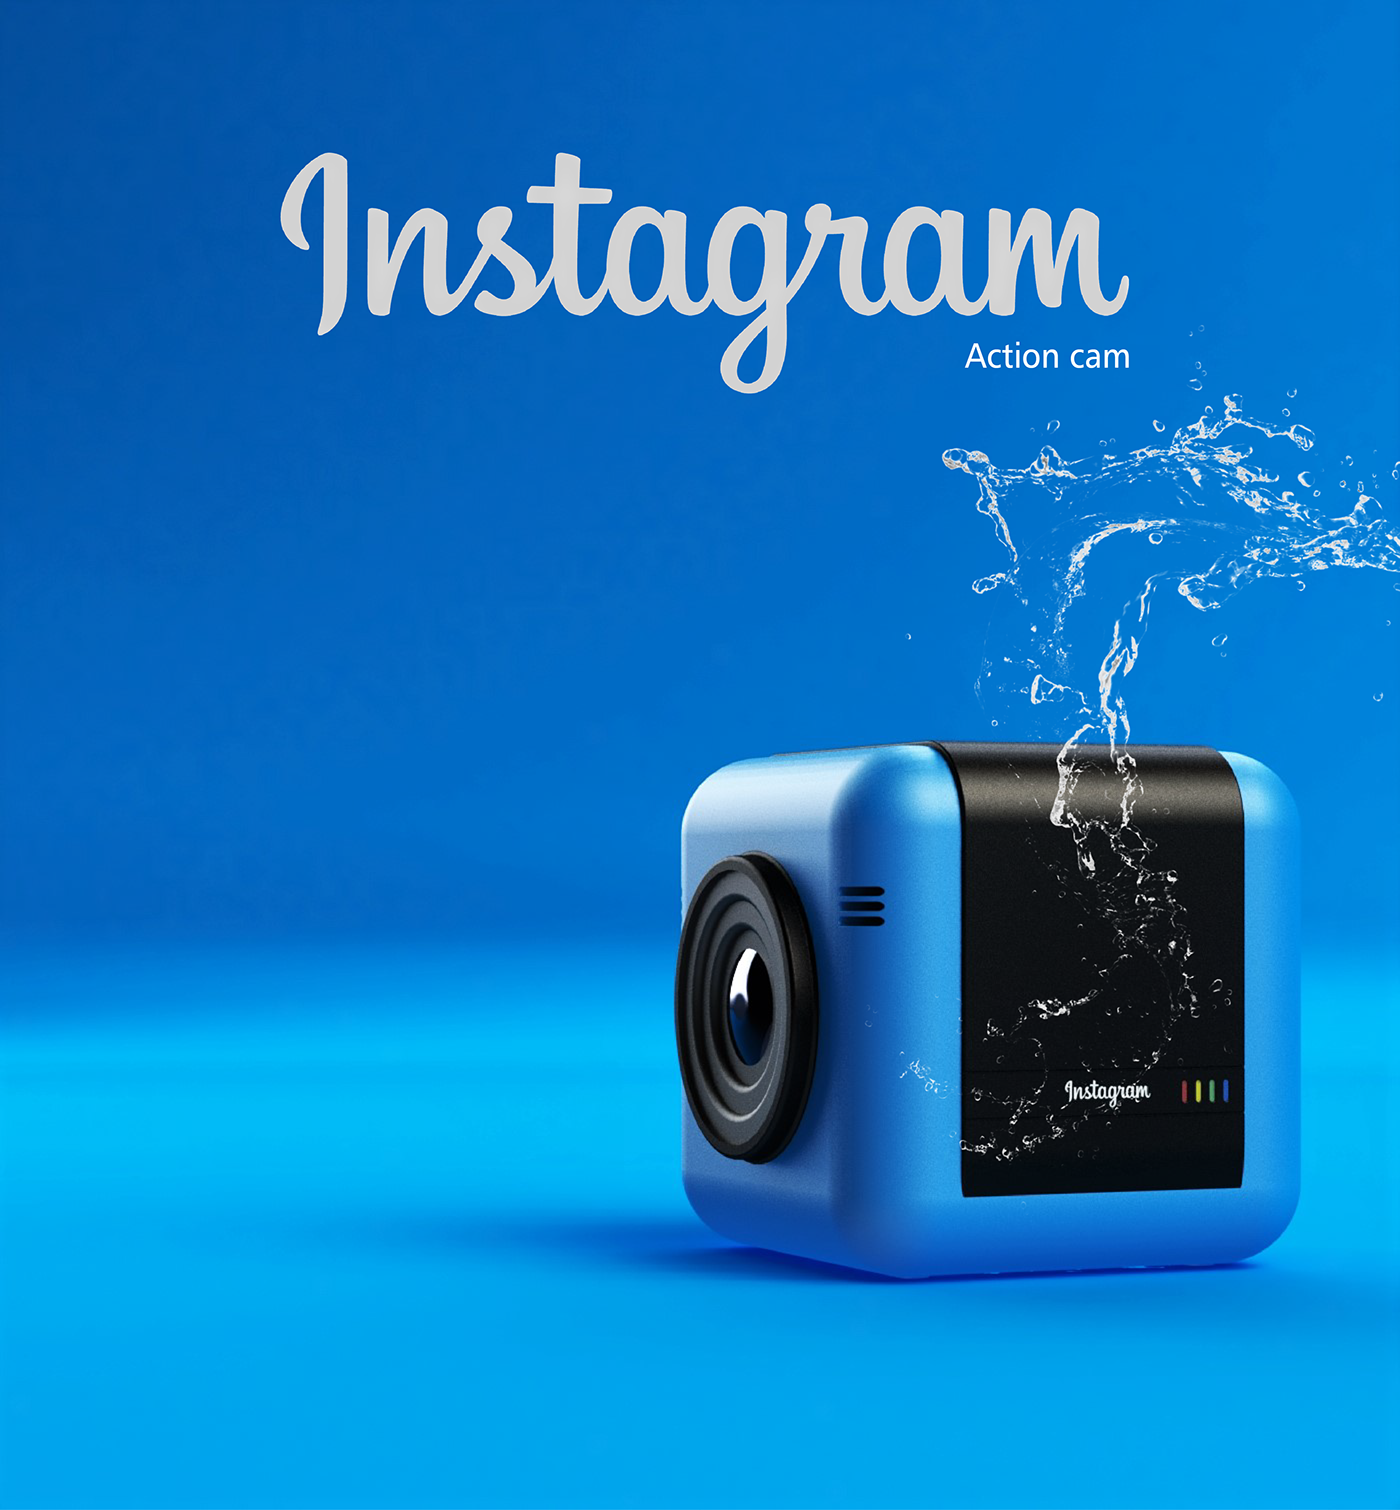 design concept camera instagram action cam product